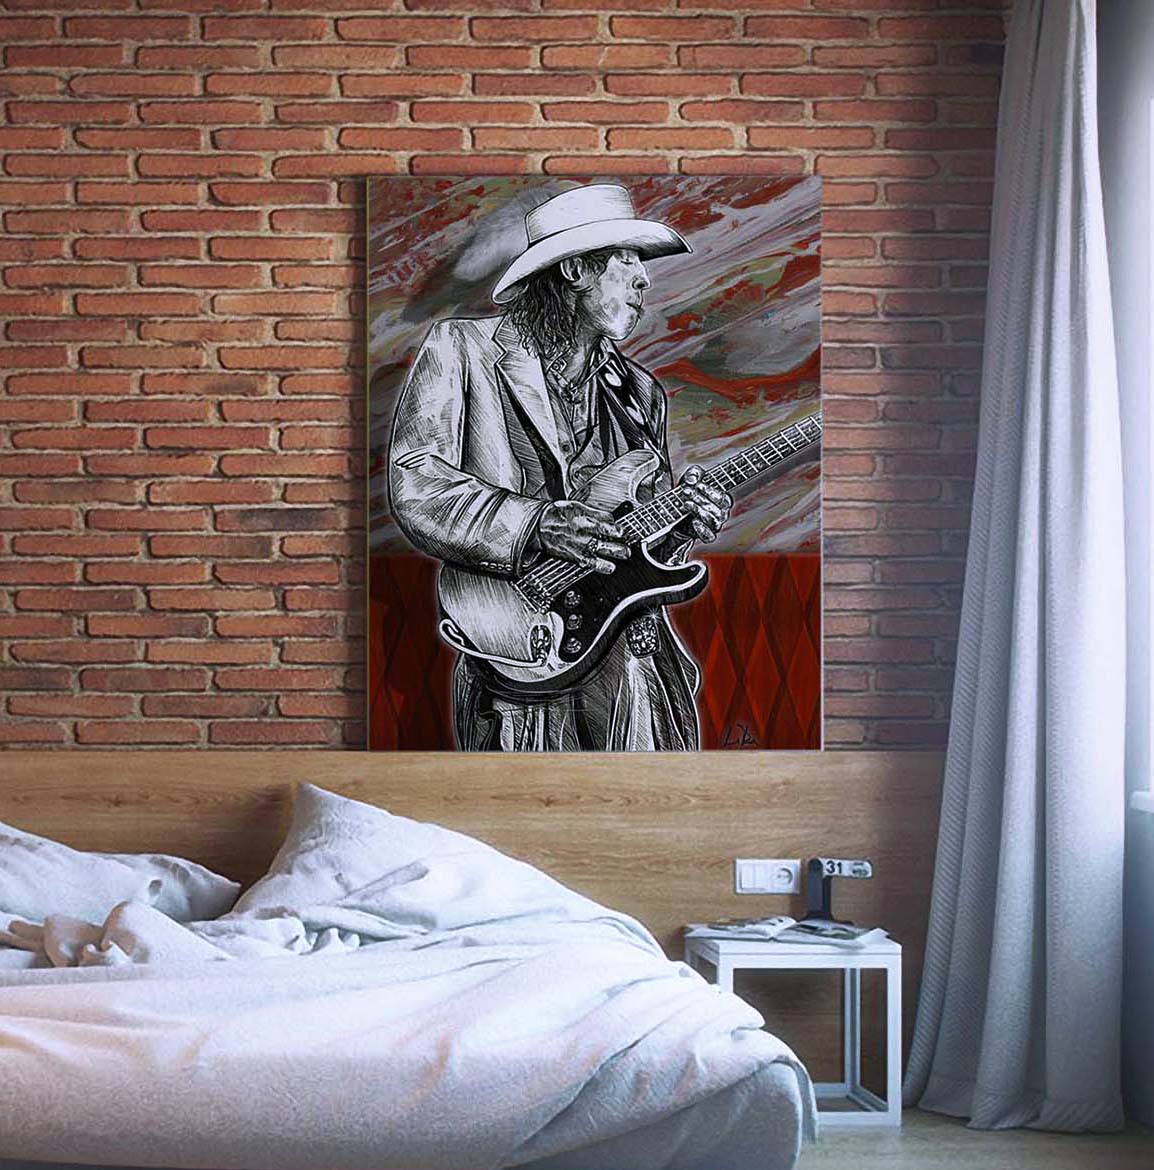 Guitarist Stevie Ray Vaughan mixed media art print on a bedroom brick wall